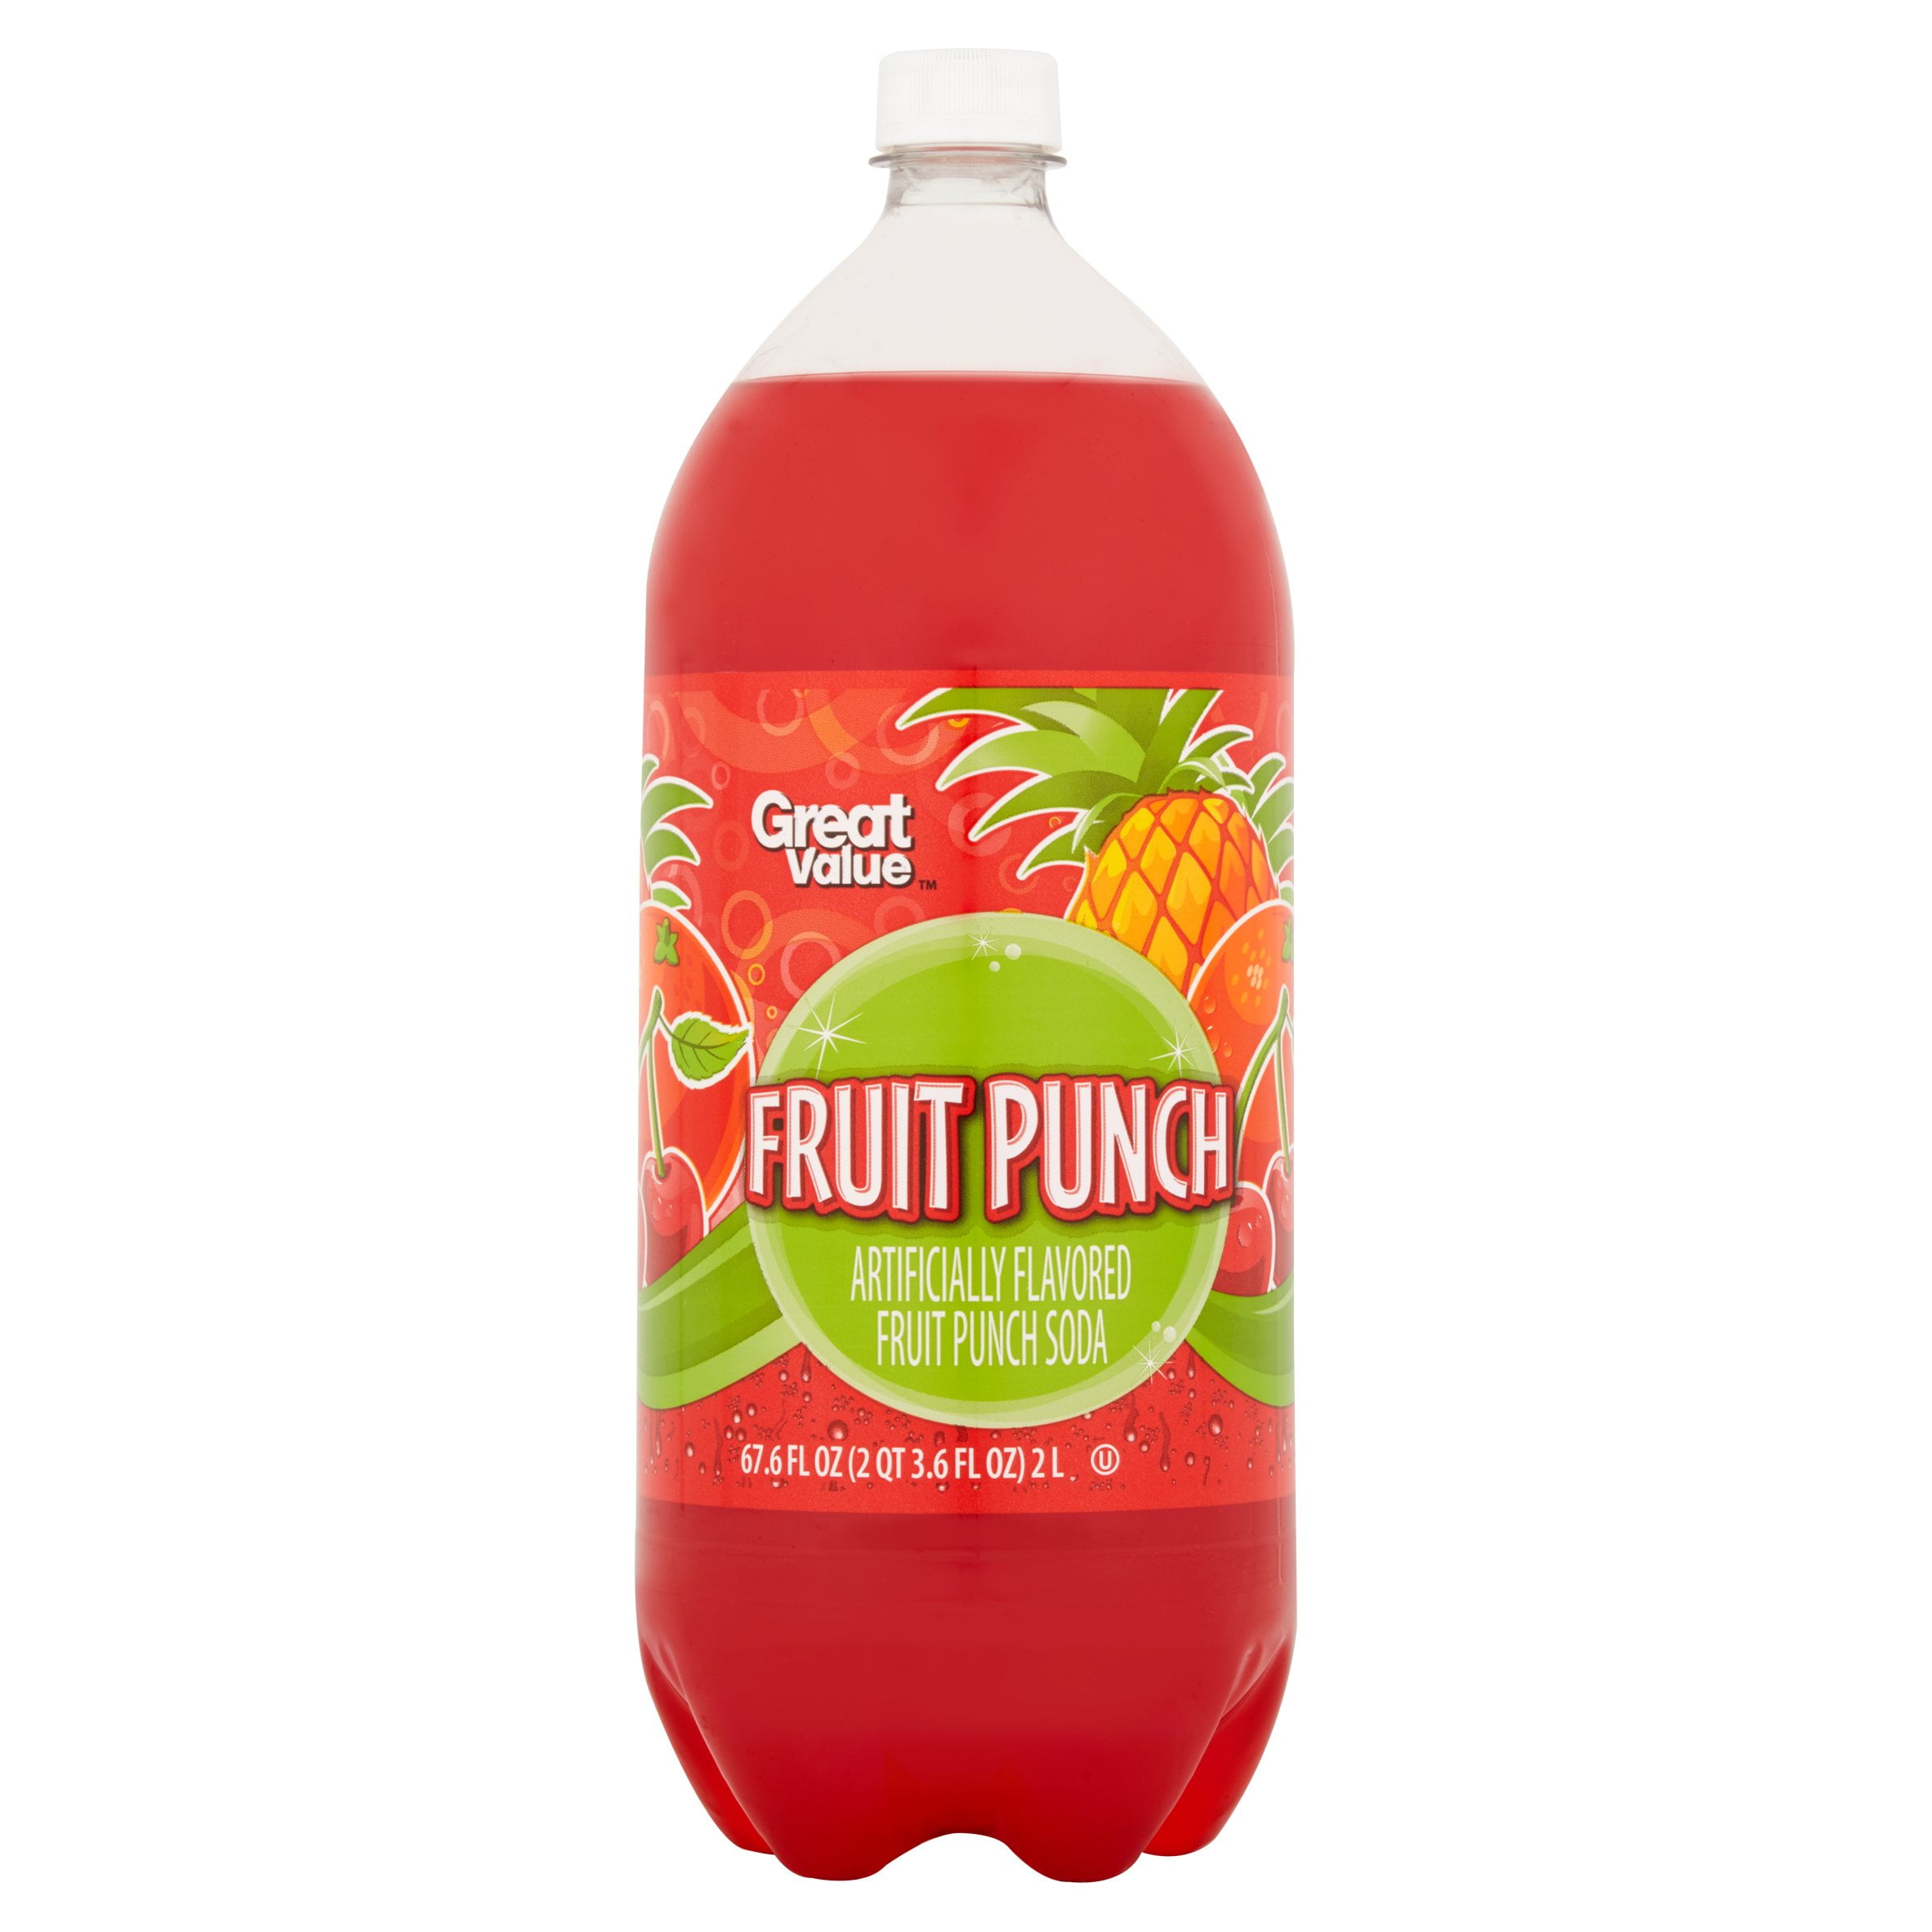 Great Value Fruit Punch Soda, 67.6 fl oz - Walmart.com - Walmart.com